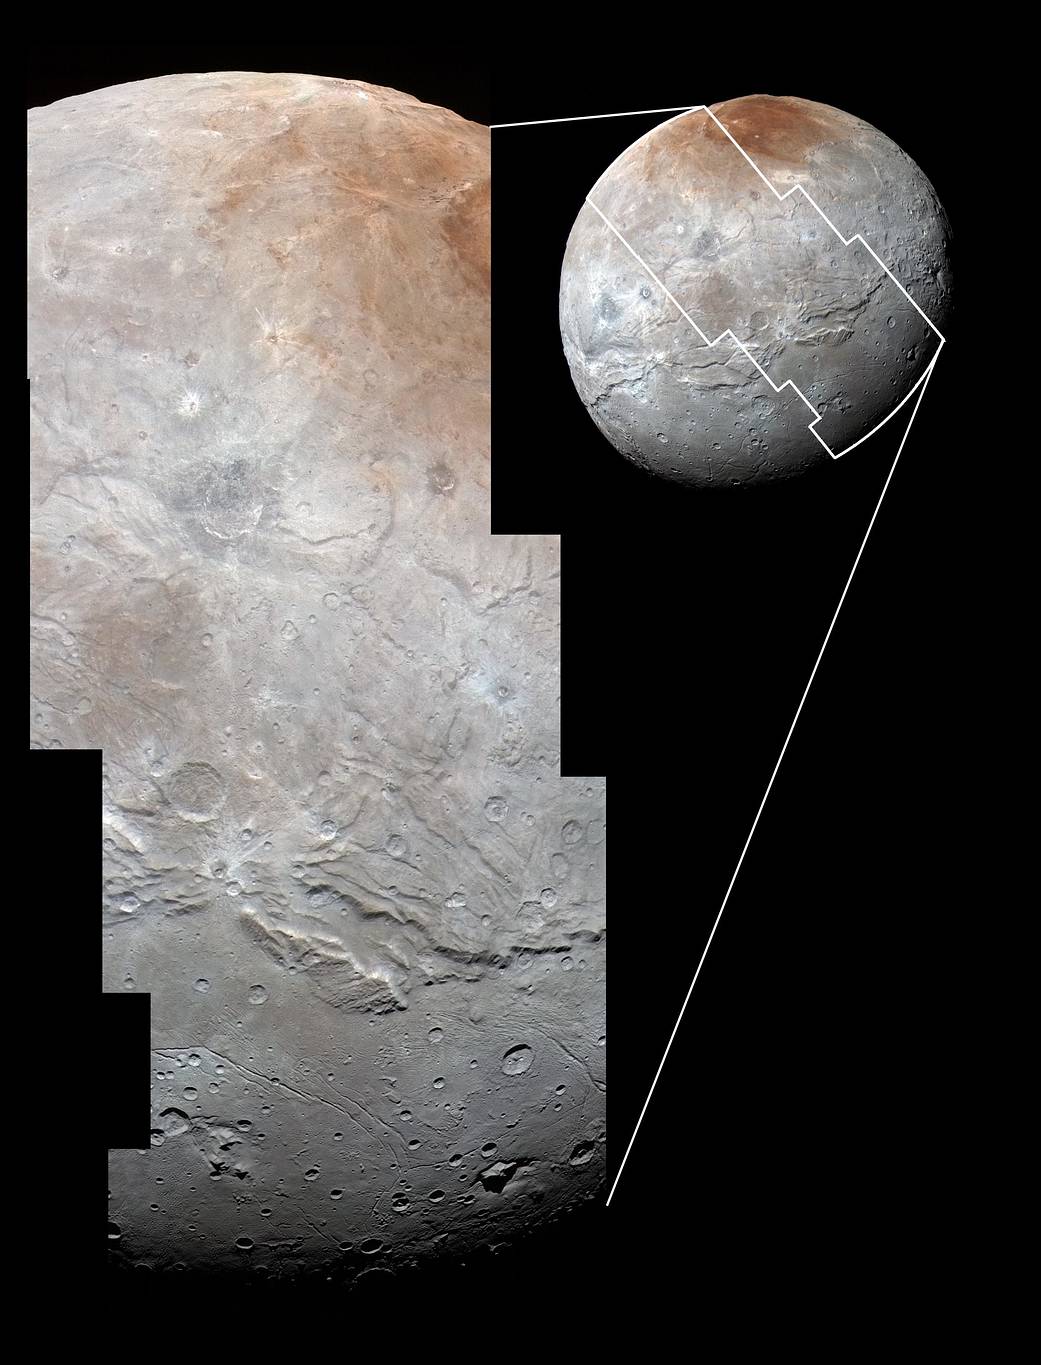 Pluto's moon Charon